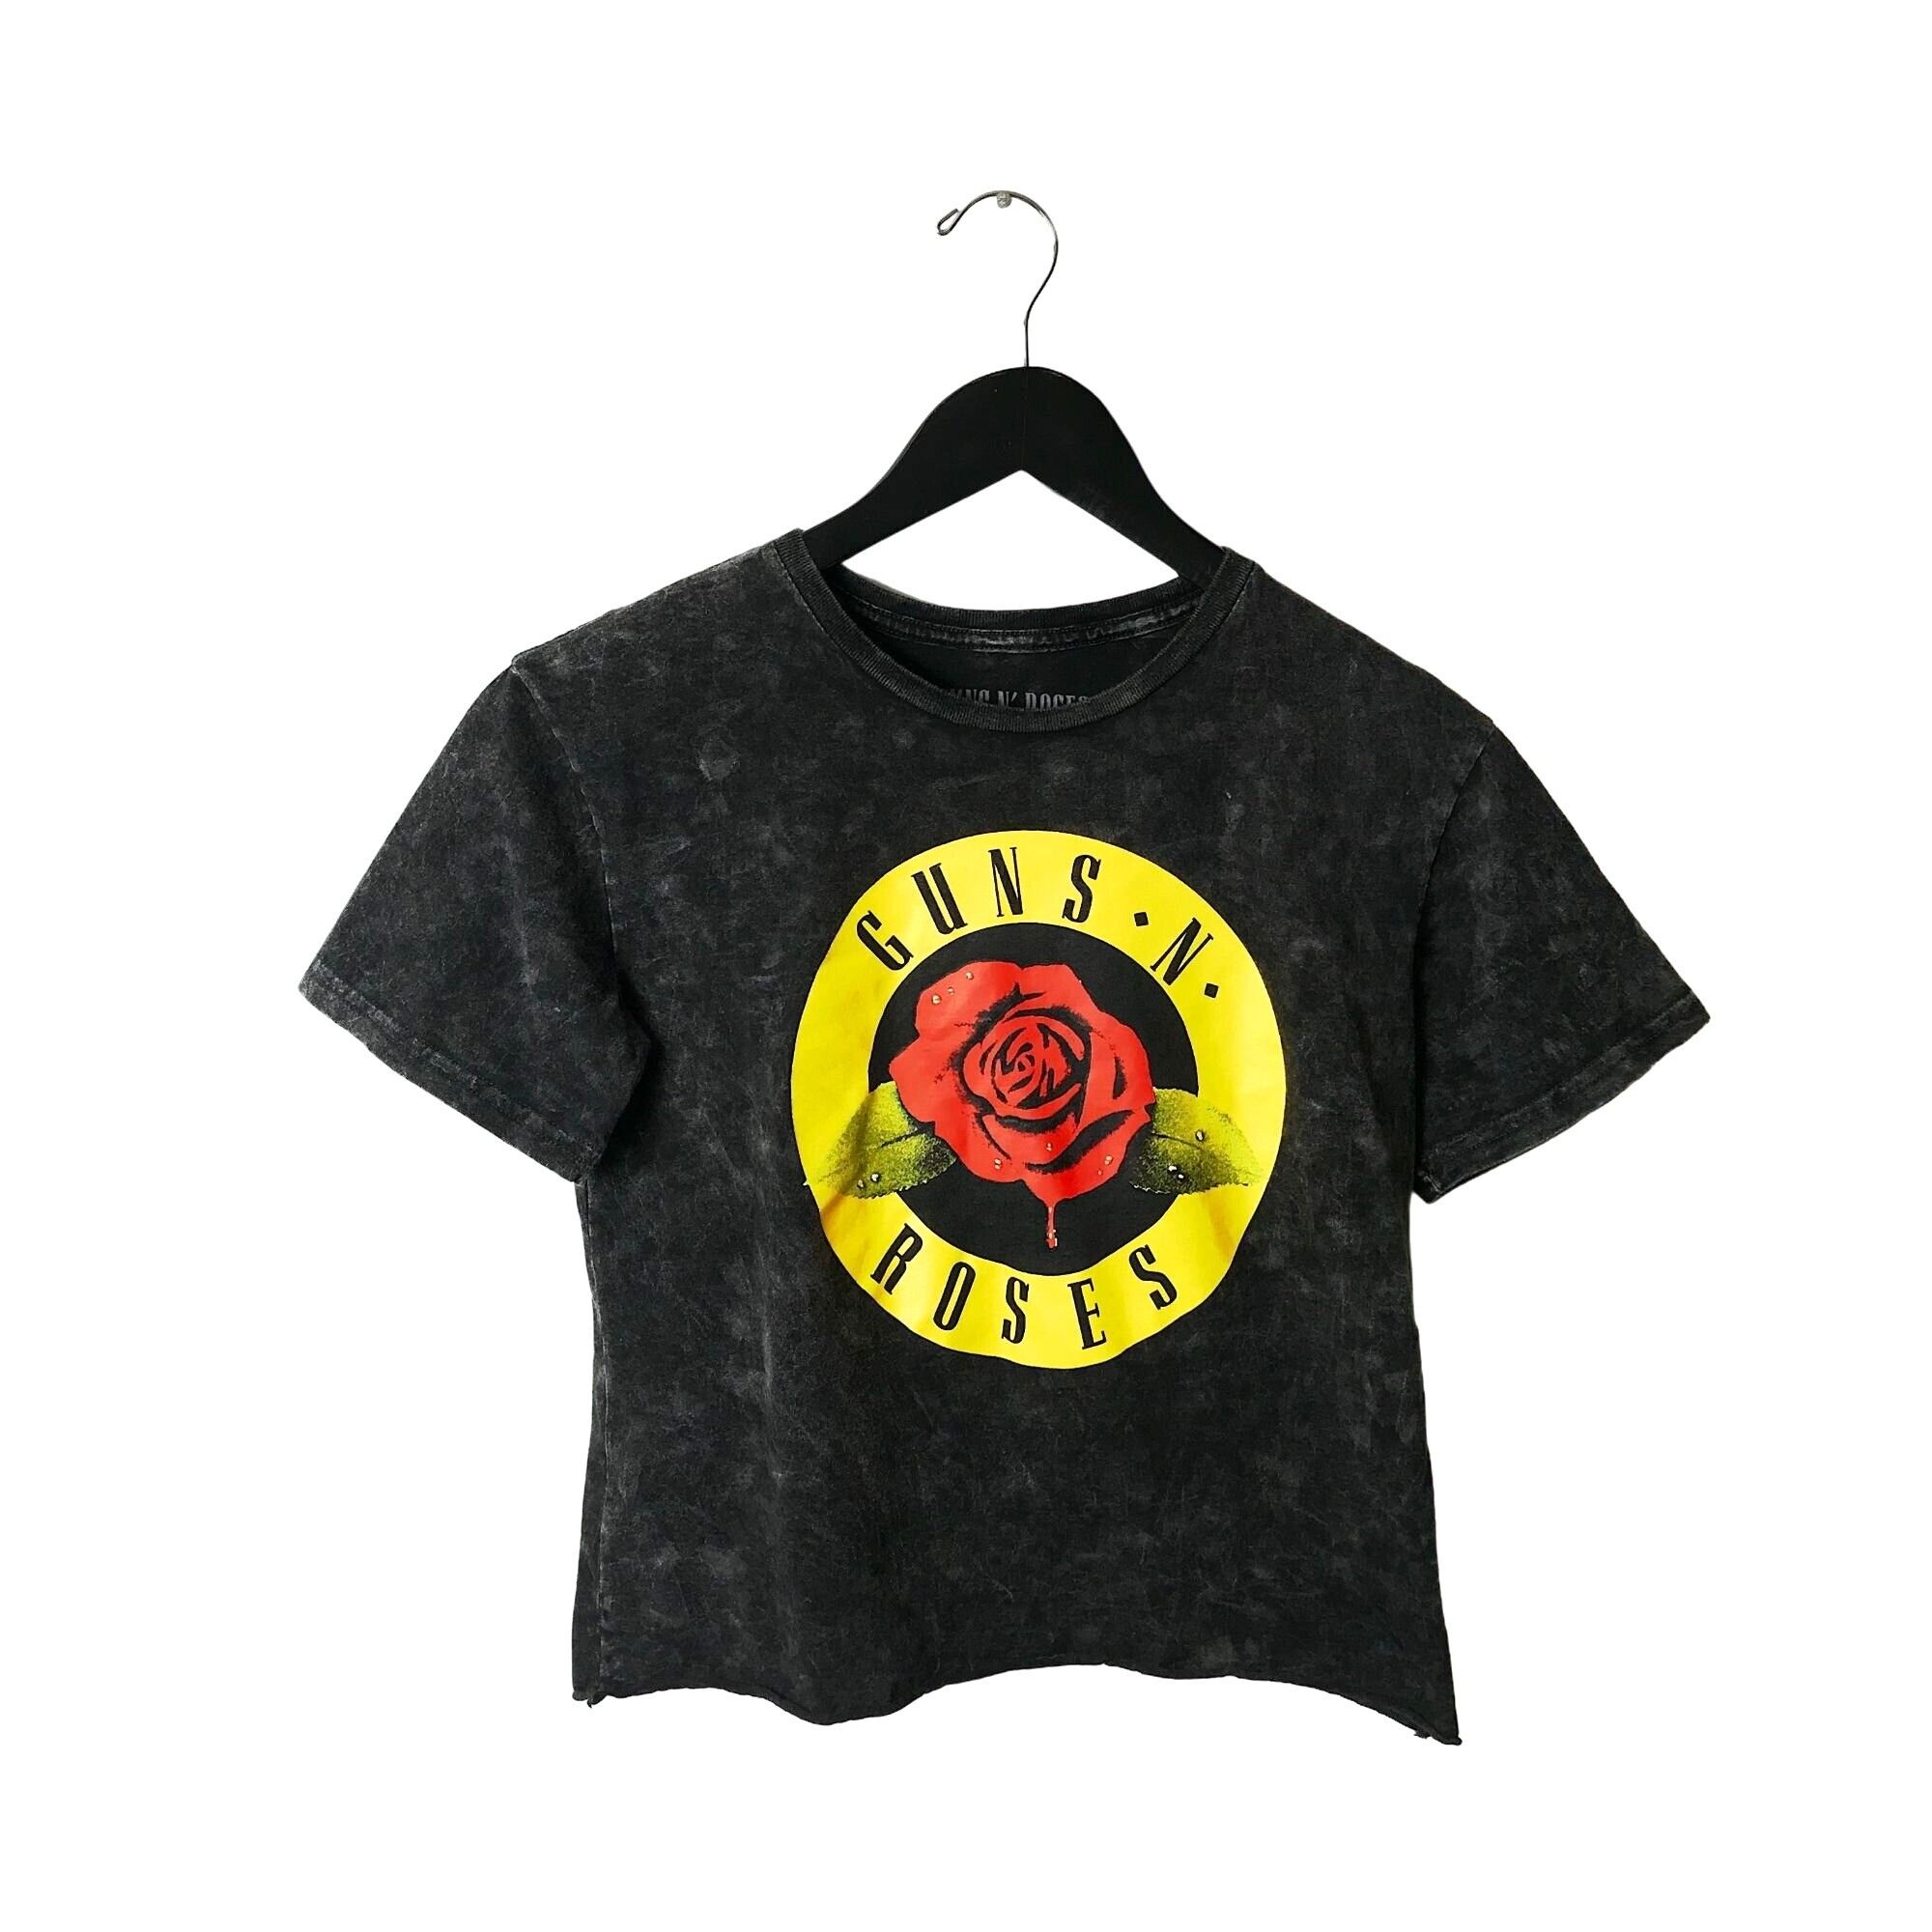 Urban Outfitters Guns N' Roses T Shirt Womens Black Medium Flower Raw Hem M Size M / US 6-8 / IT 42-44 - 1 Preview